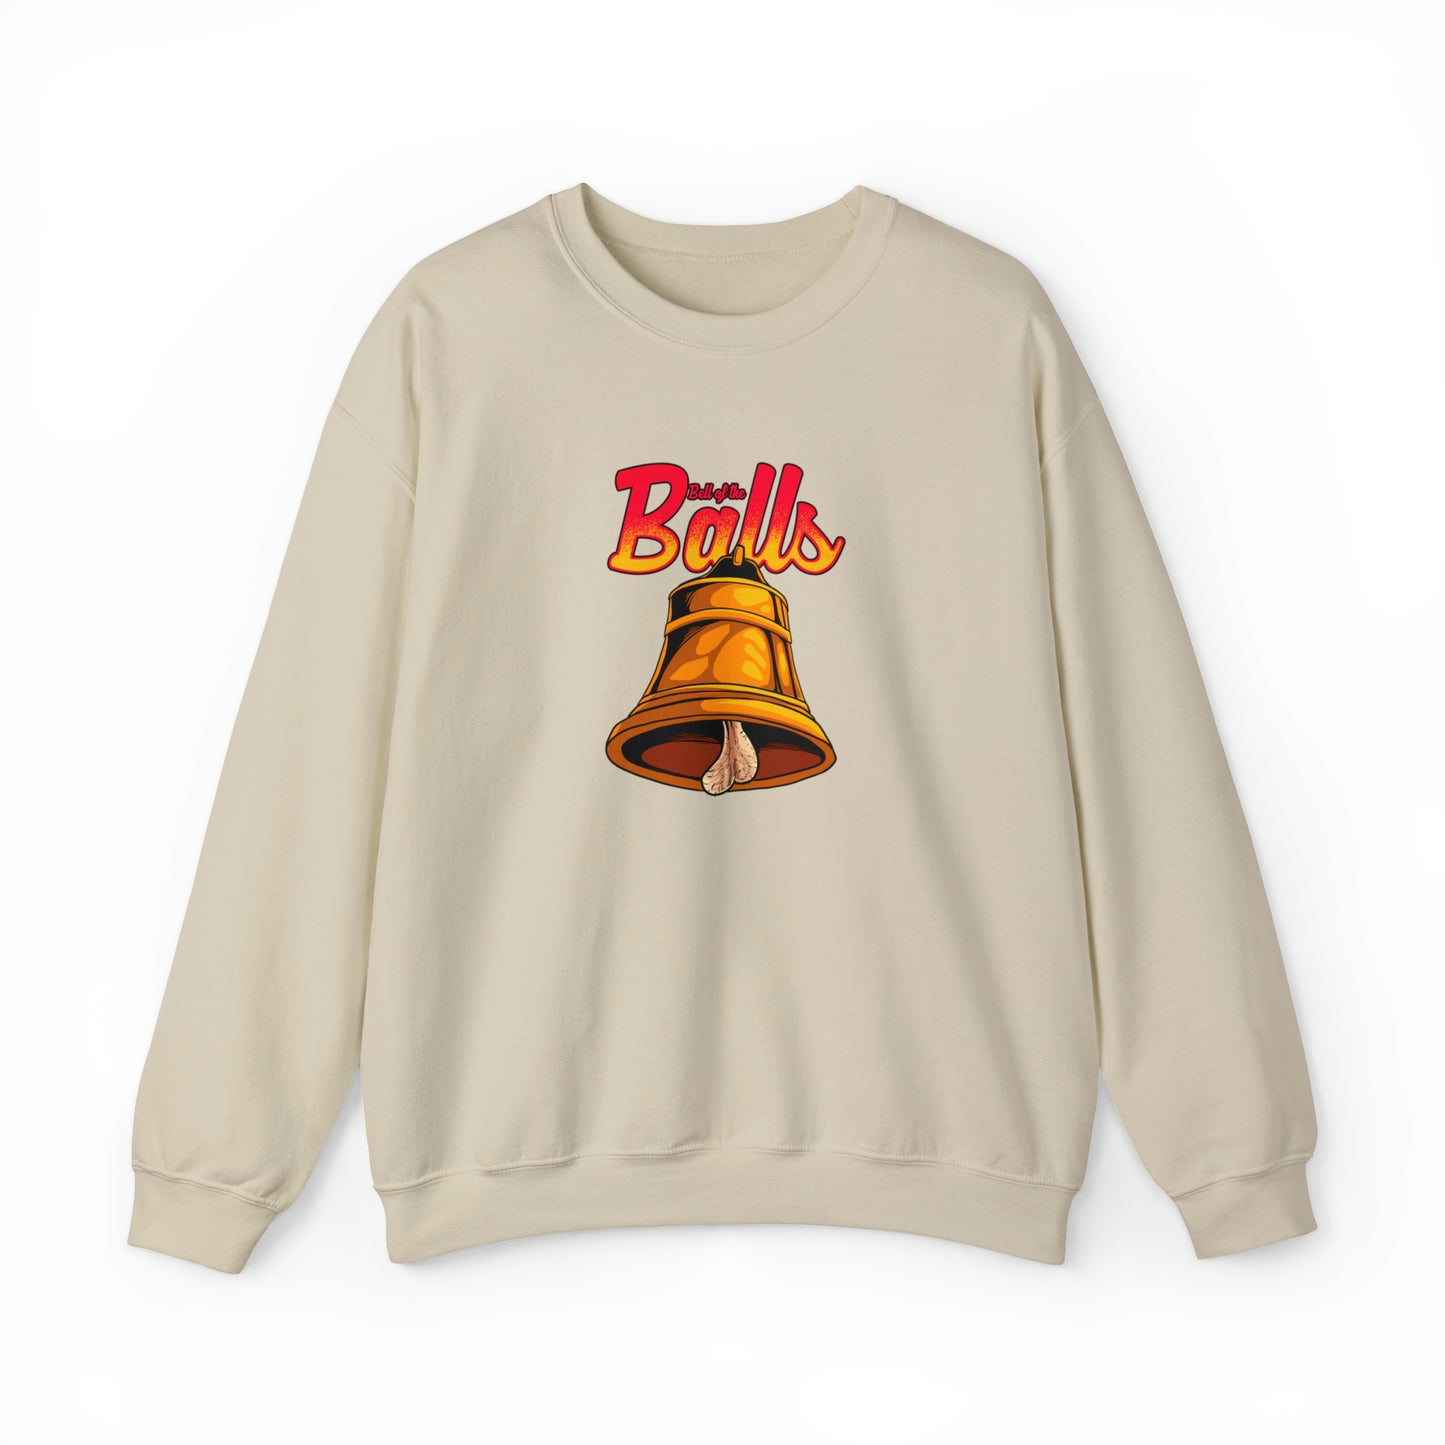 Custom Parody Crewneck Sweatshirt, Bell of the Balls Design